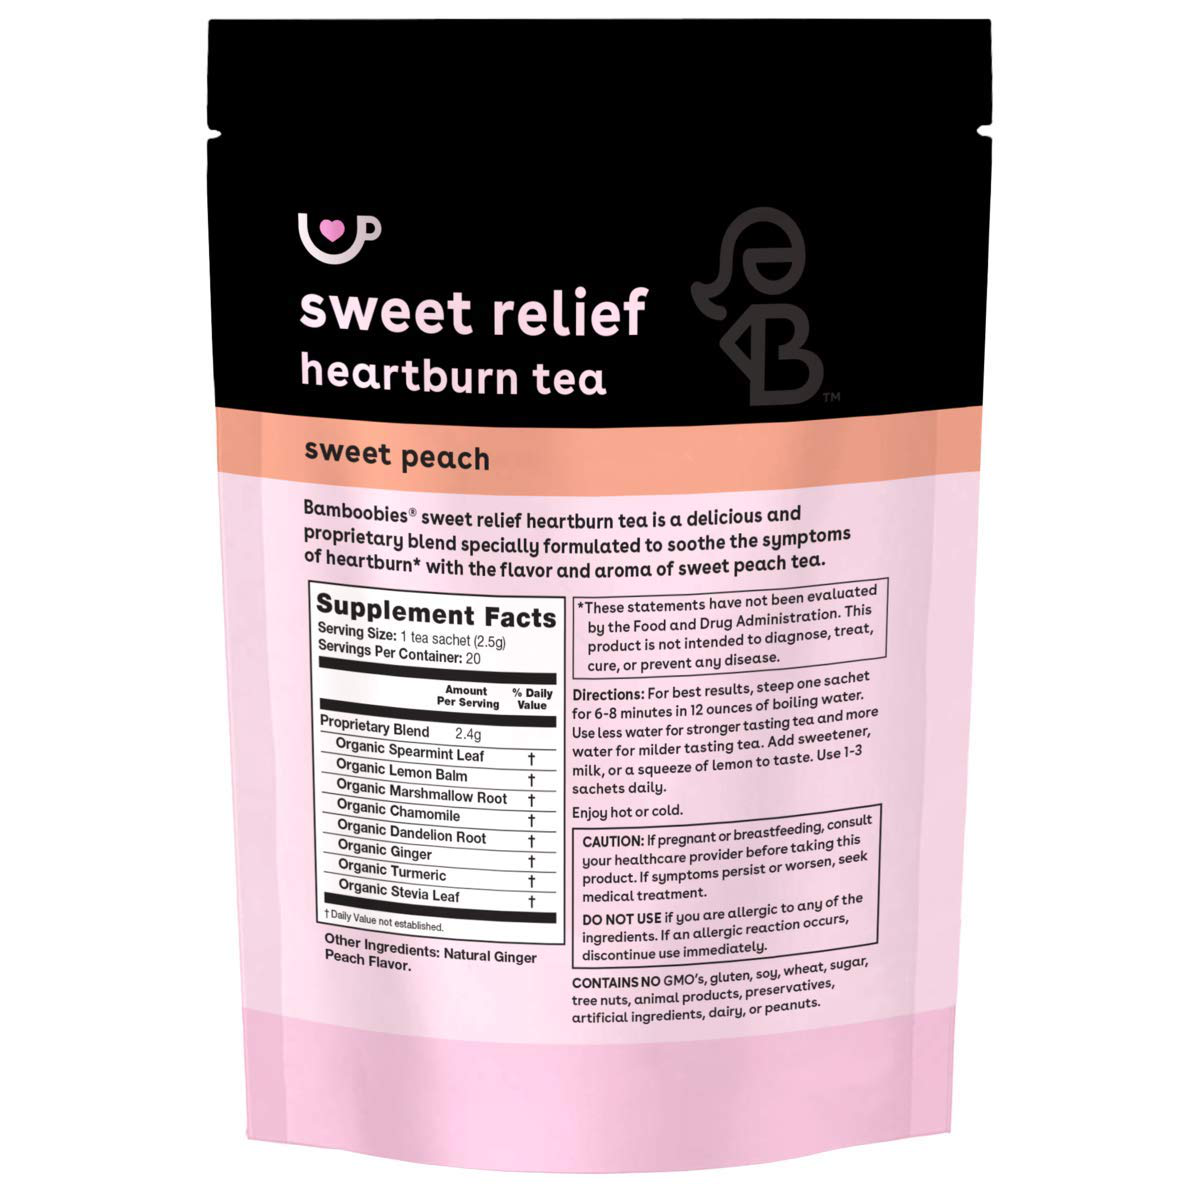 Bamboobies Women's Energy Boost Drink Mix, Raspberry Lemonade, Breastfeeding Supplement Packets, 20 Packets , 4.2 Ounce (Pack of 1)